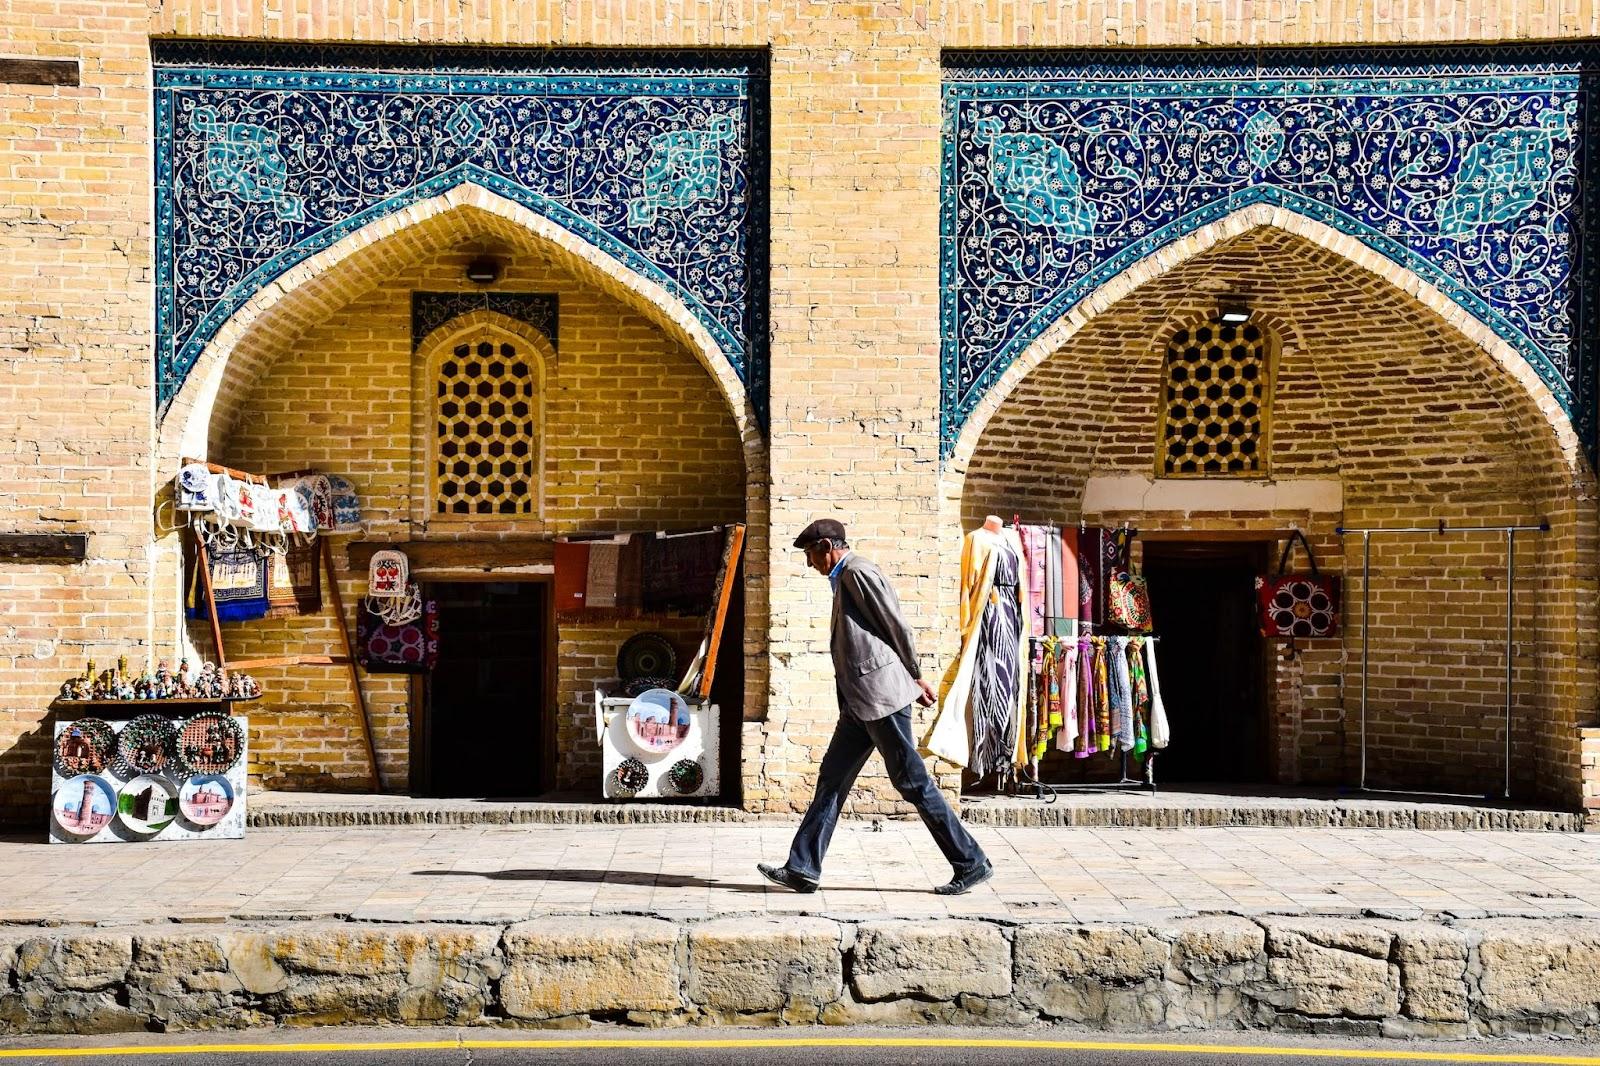 A Uzbekistani man walking past a building housing ceramics and fabric for sale.